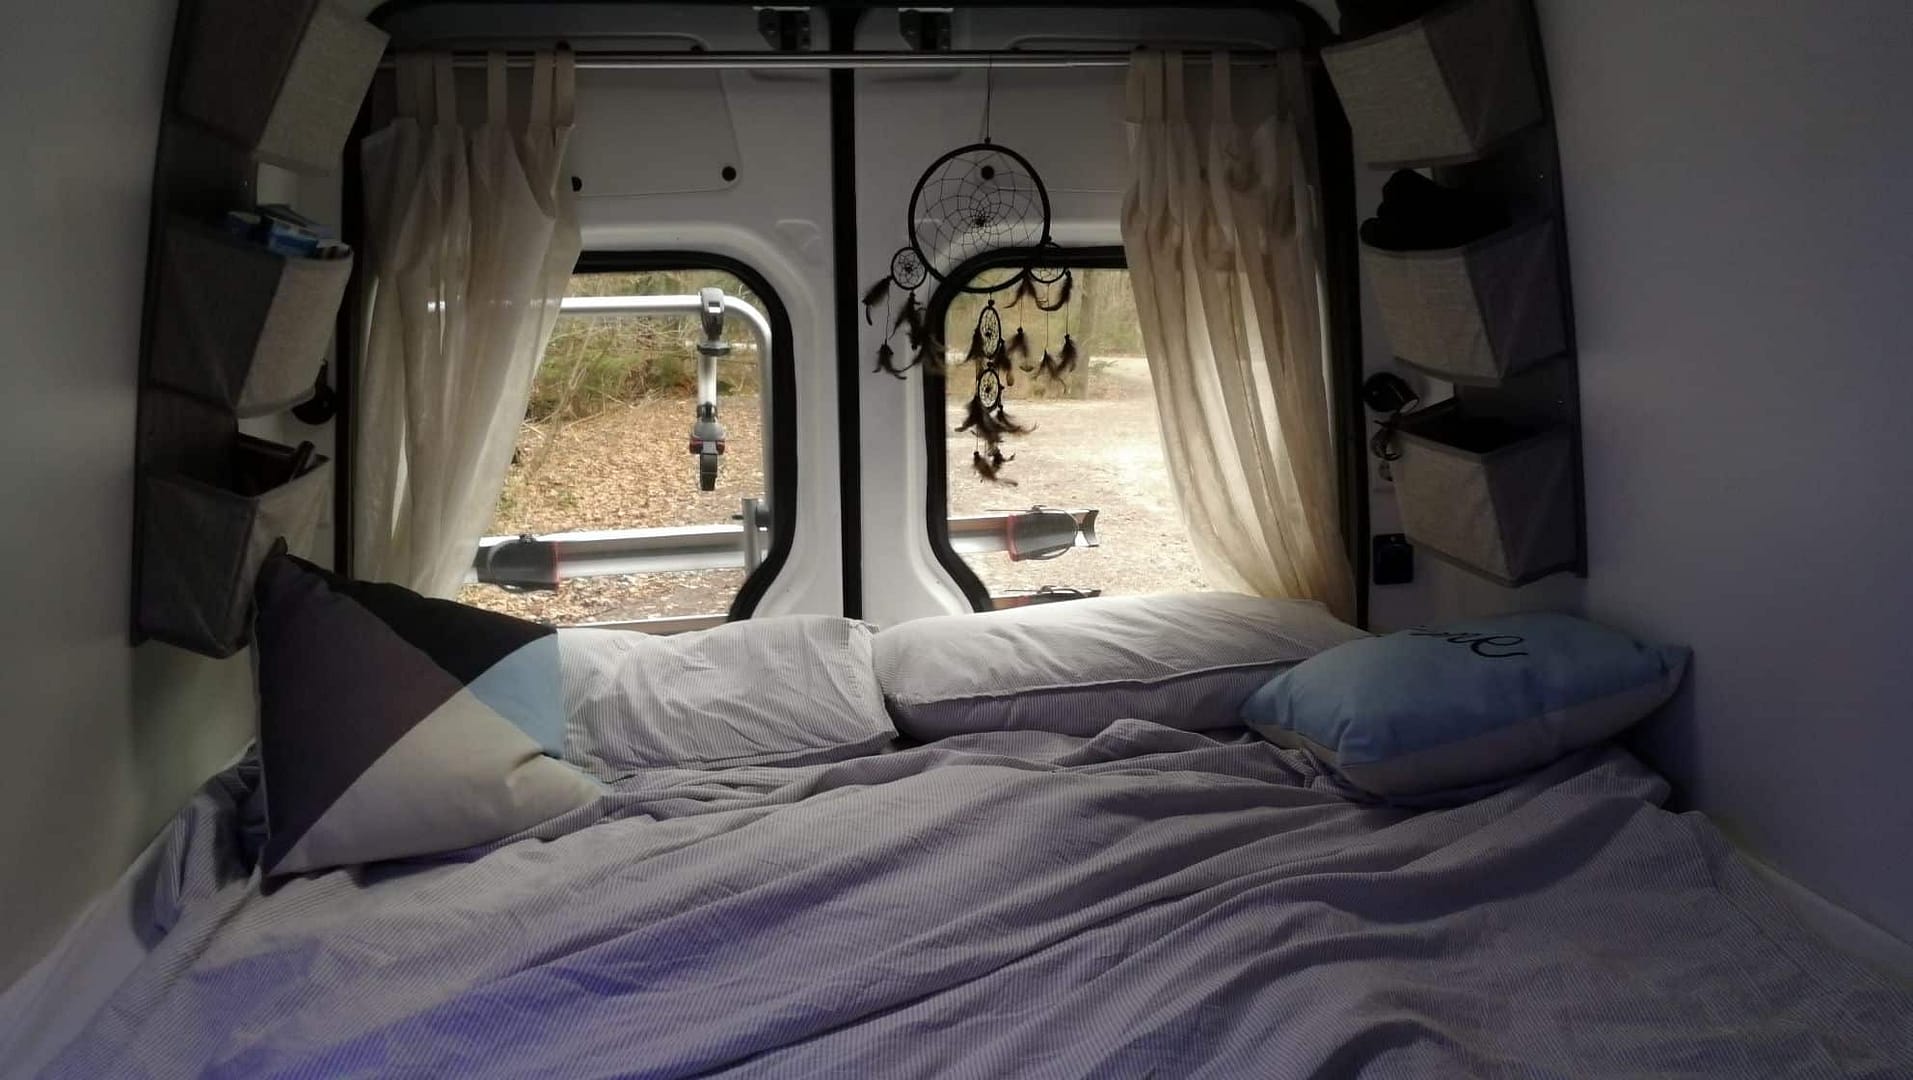 DIY fully assembled camper van windows